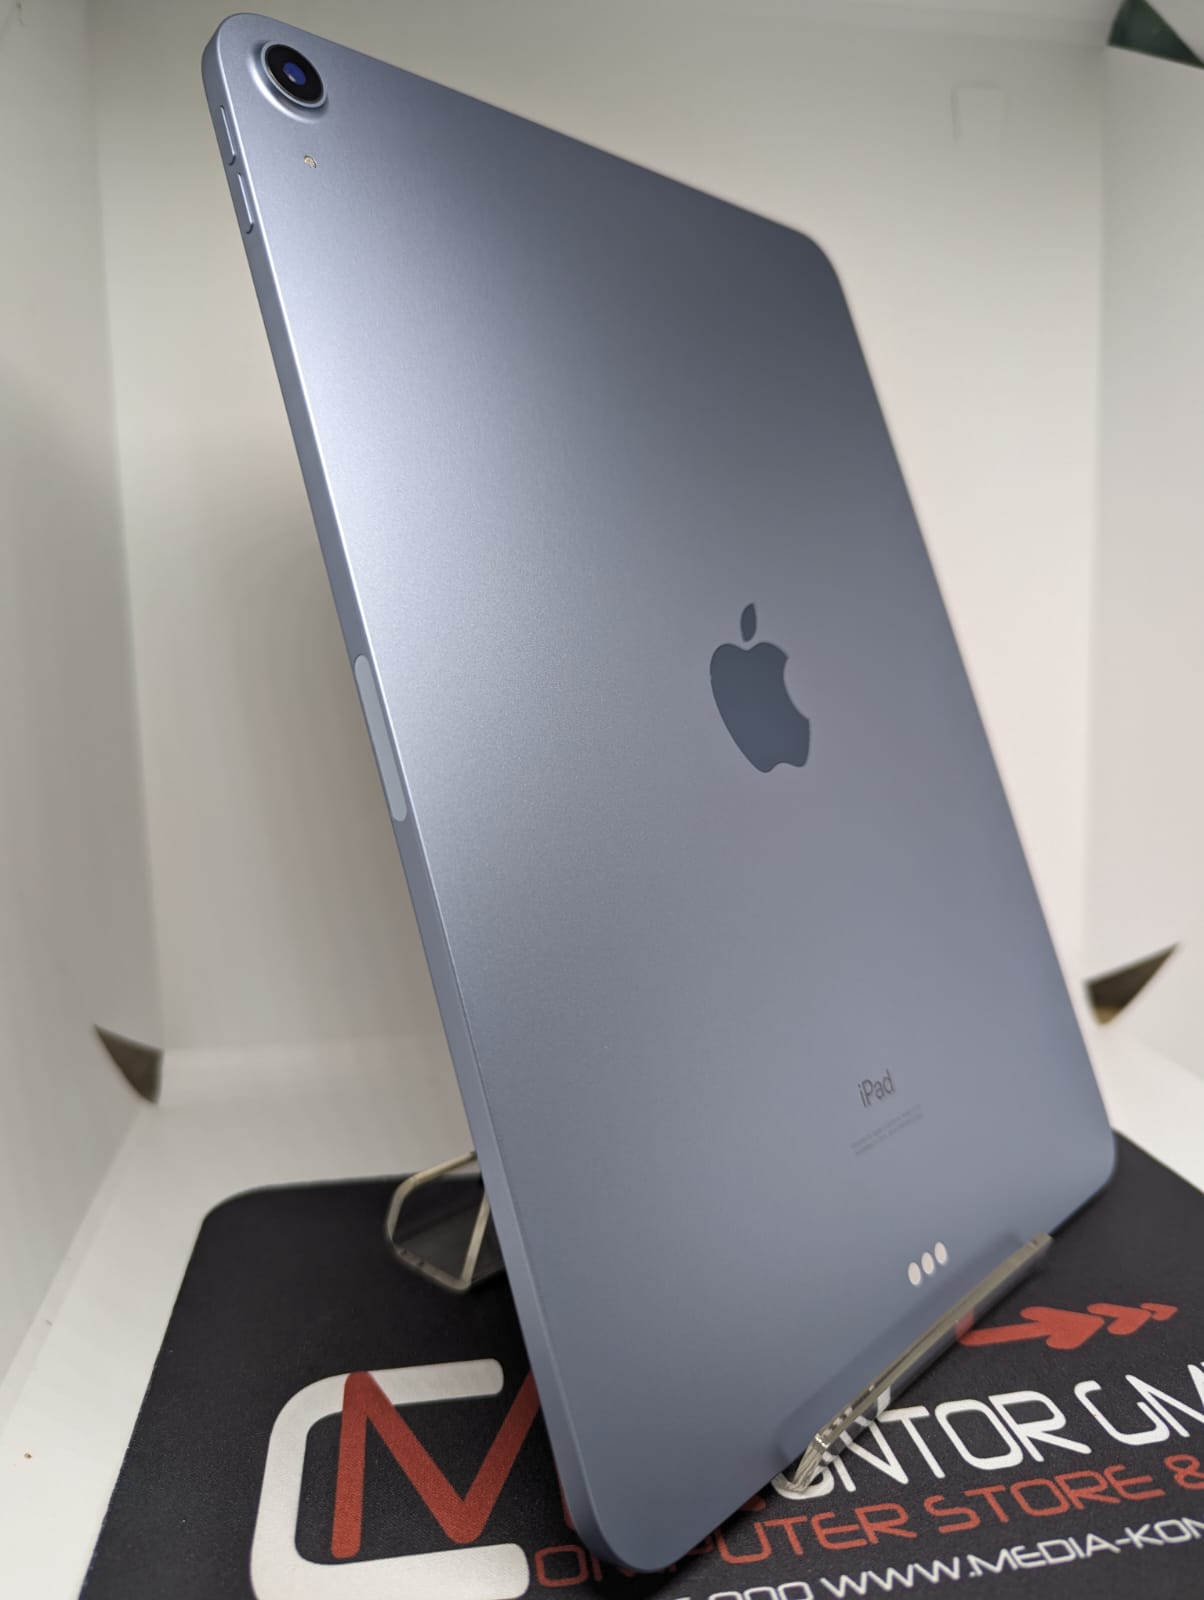 iPad Air (2020) 4. Generation 64 Go - WLAN - Skyblue, refurbished, grade A /B